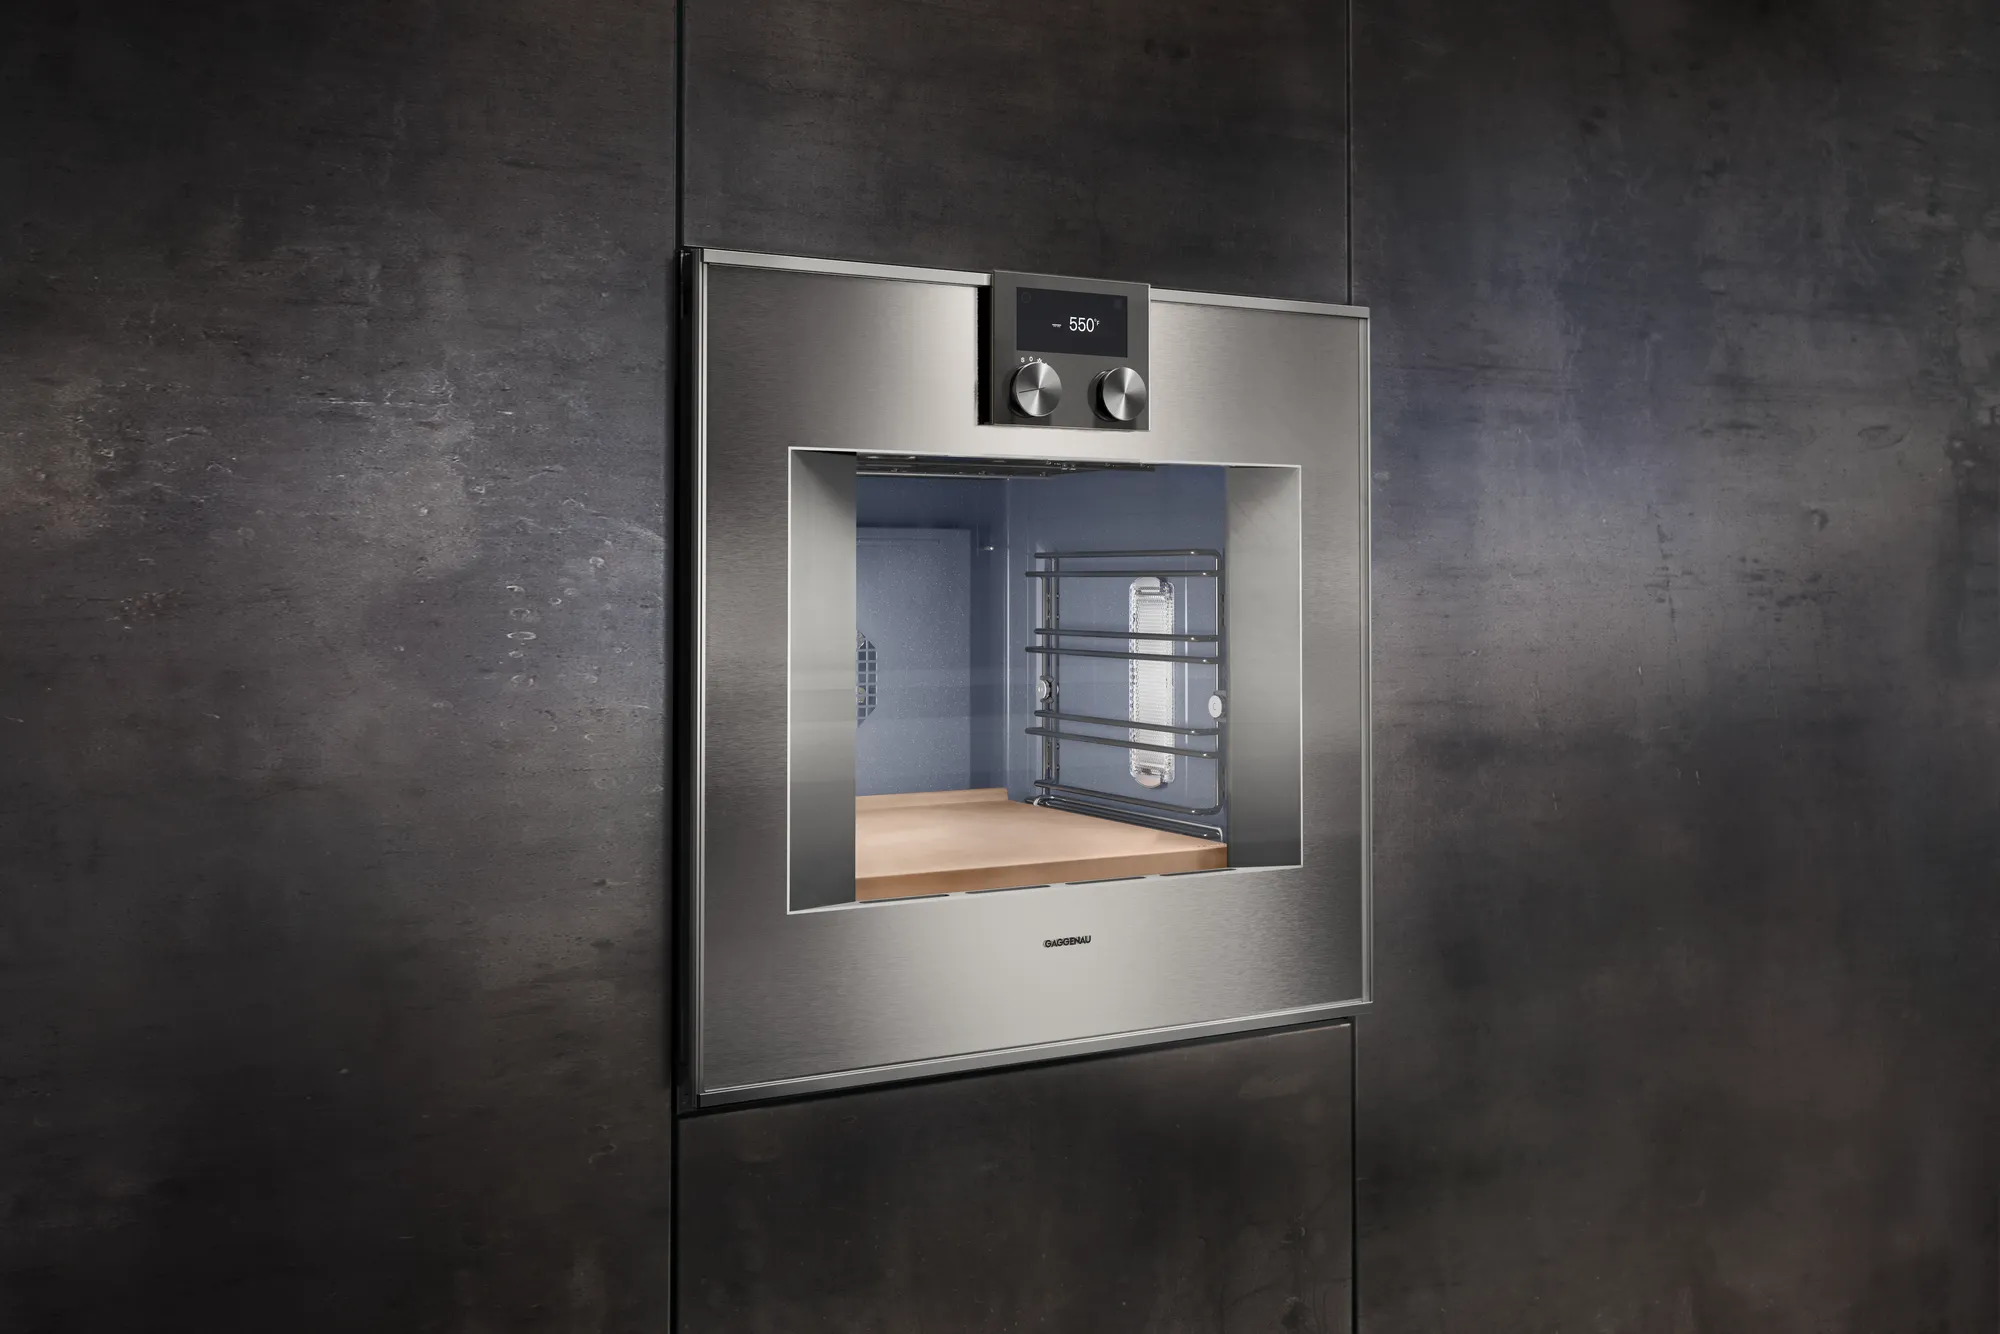 Luxury kitchen appliance brand Gaggenau 400 series oven. Buy in the UK with Krieder.